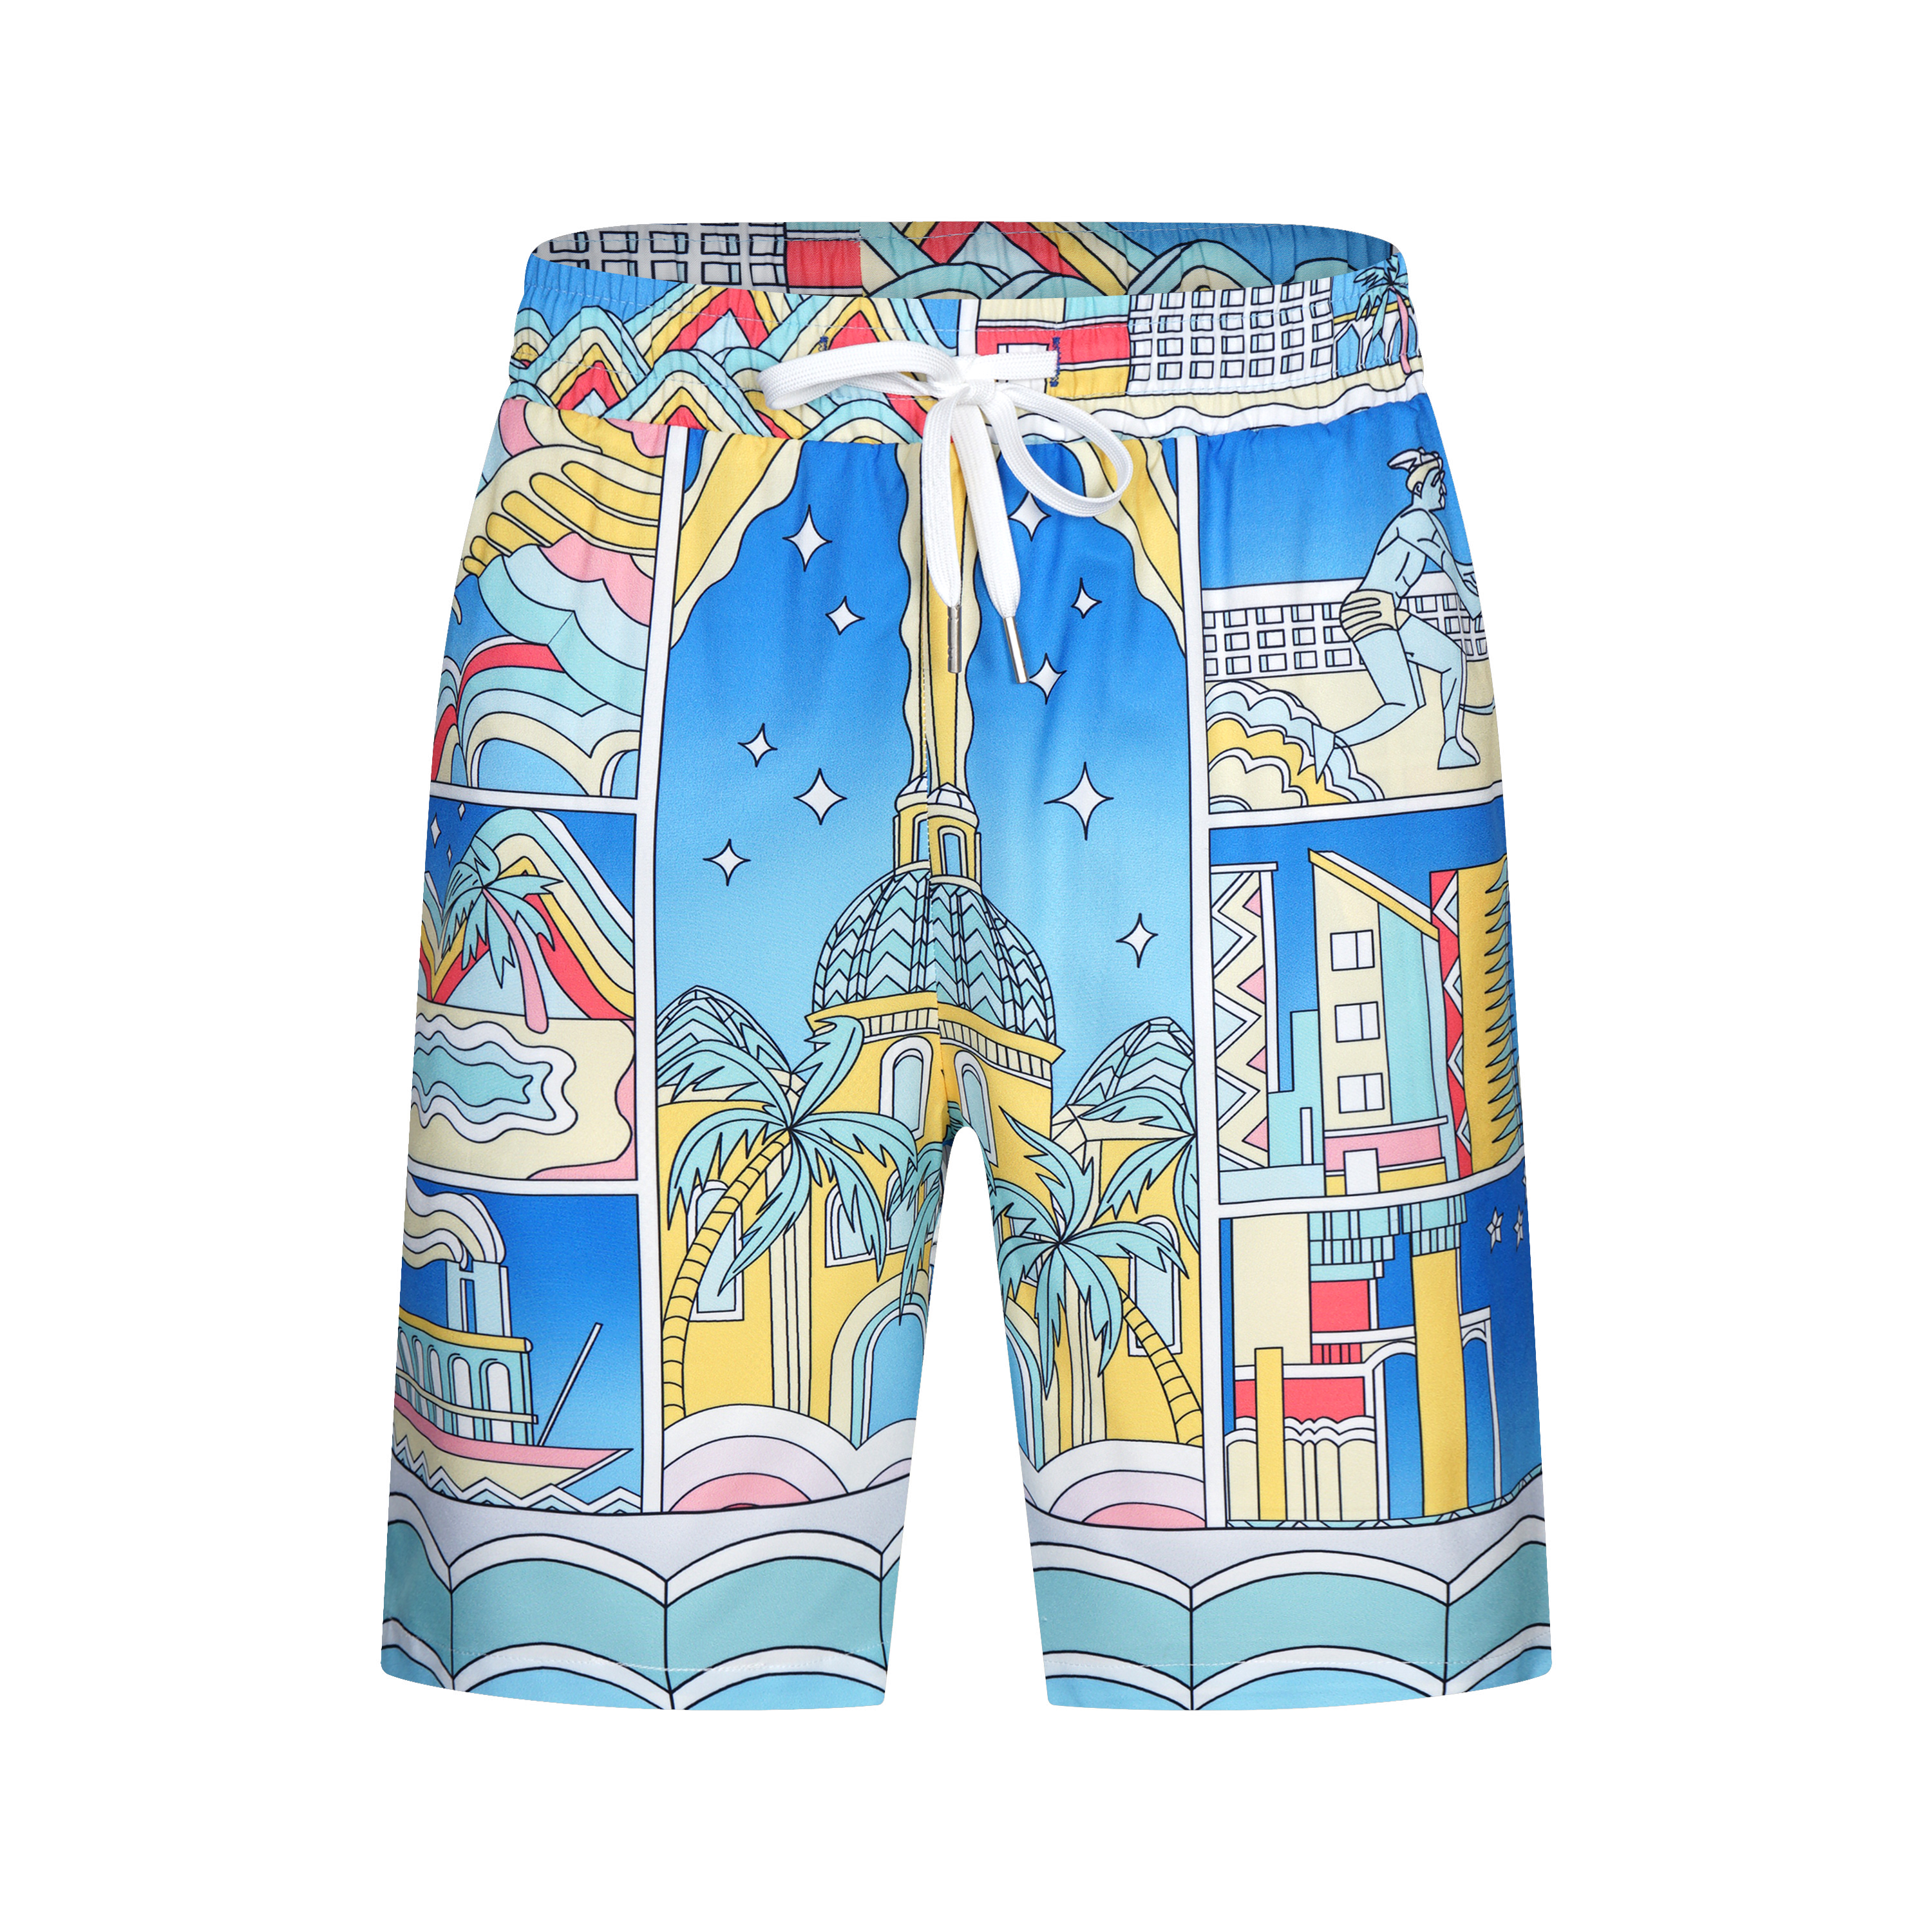 Casablanca Boardshorts For Men # 269480, cheap Shorts Casablanca Shorts, only $35!